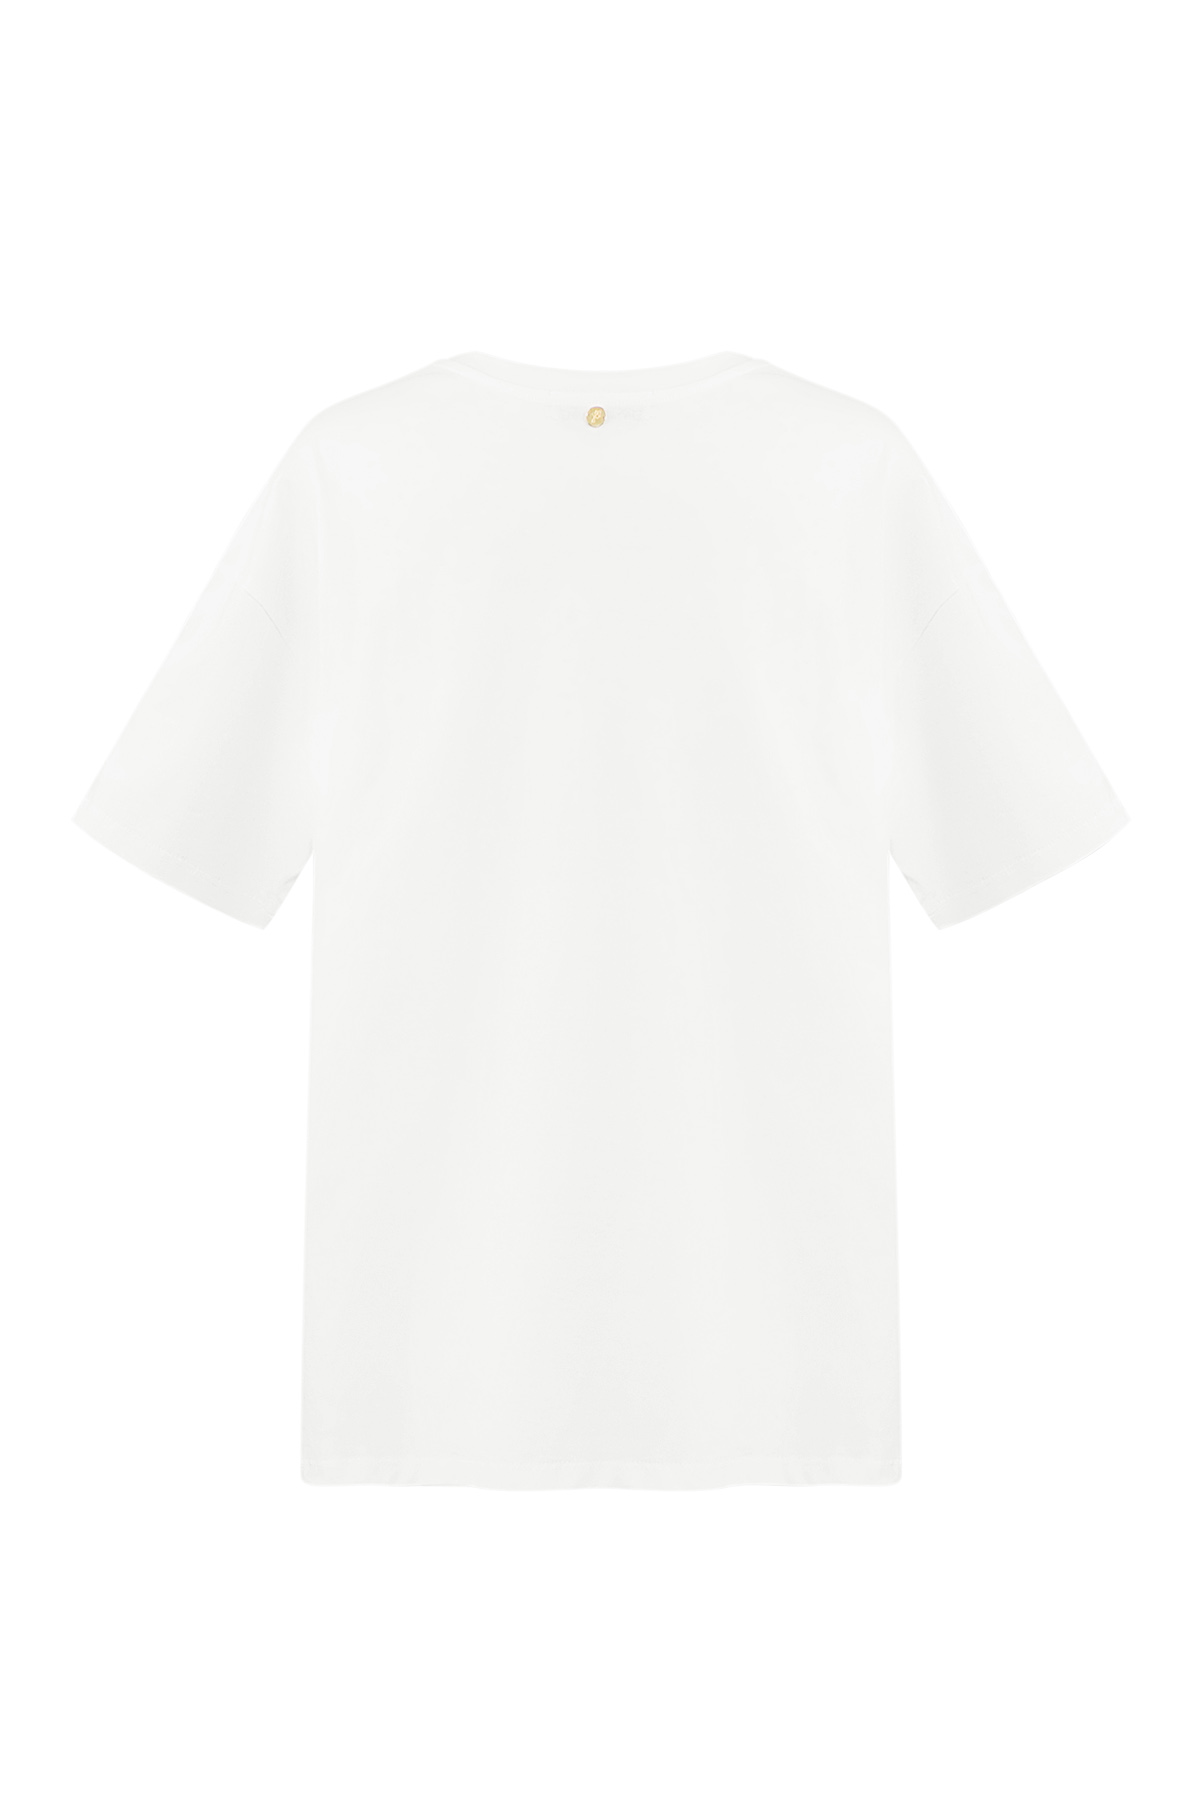 T-shirt mon amour - bianca e nera h5 Immagine7